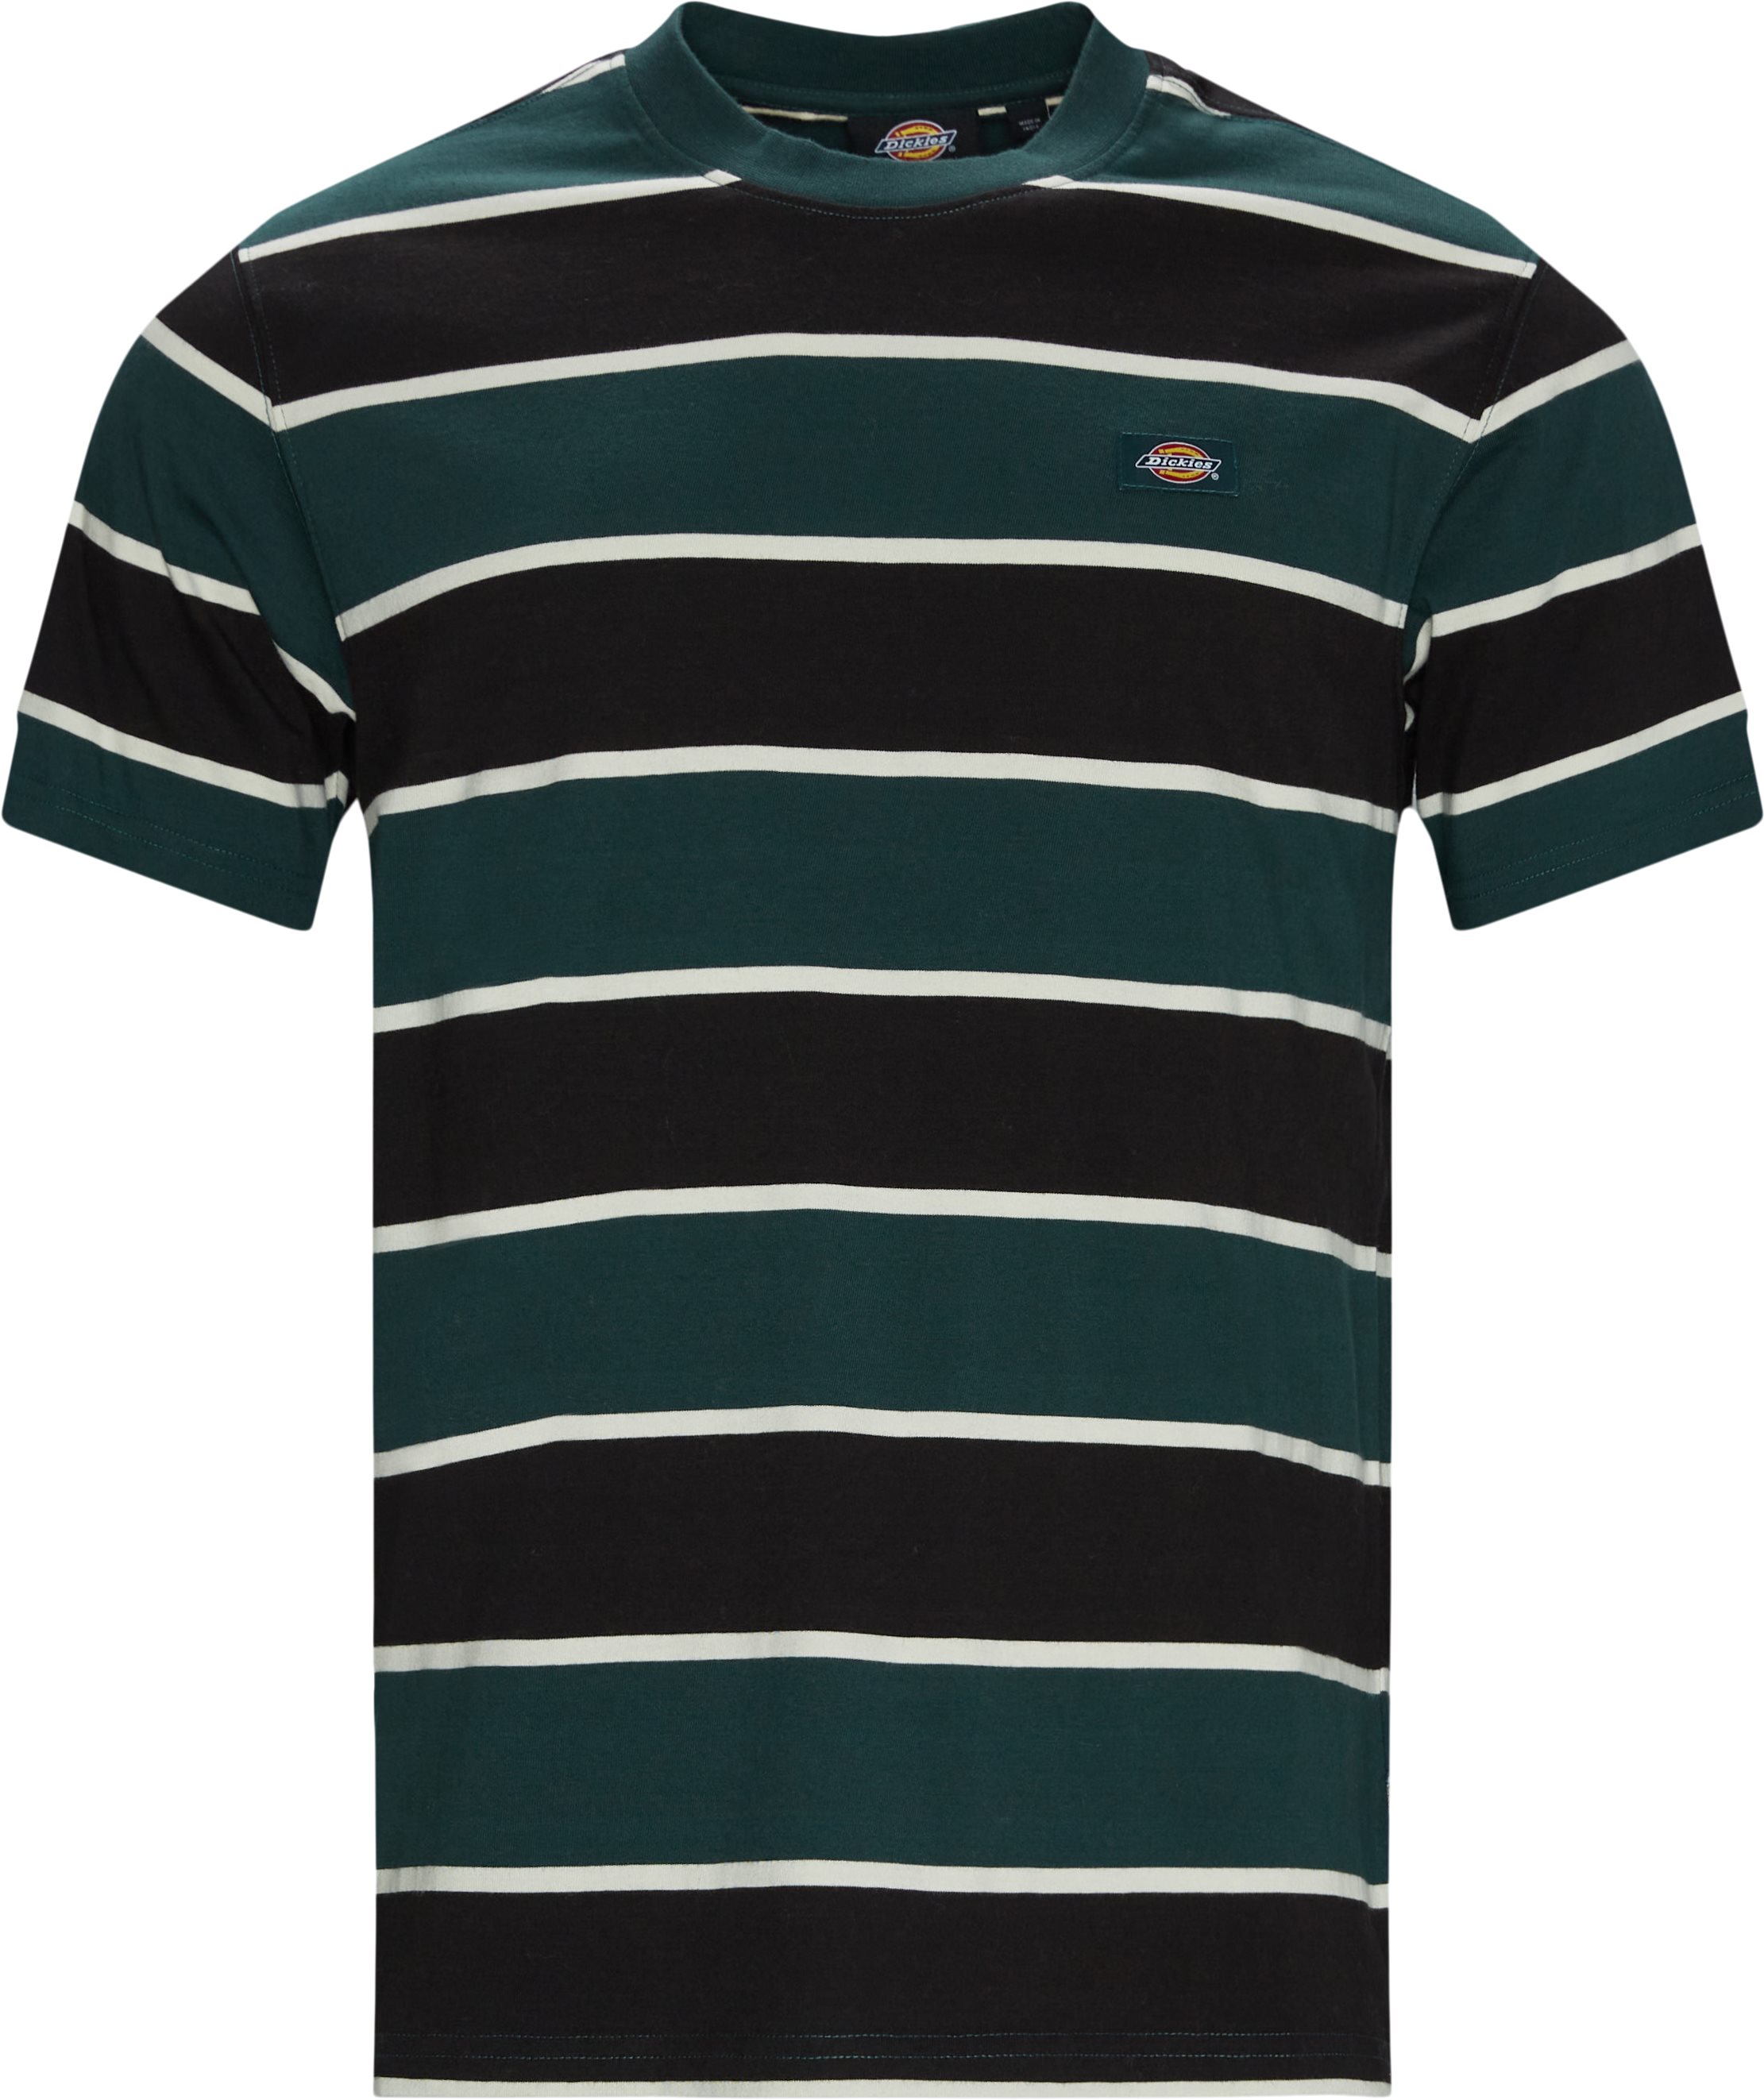 Oakhaven Tee - T-shirts - Regular fit - Grön